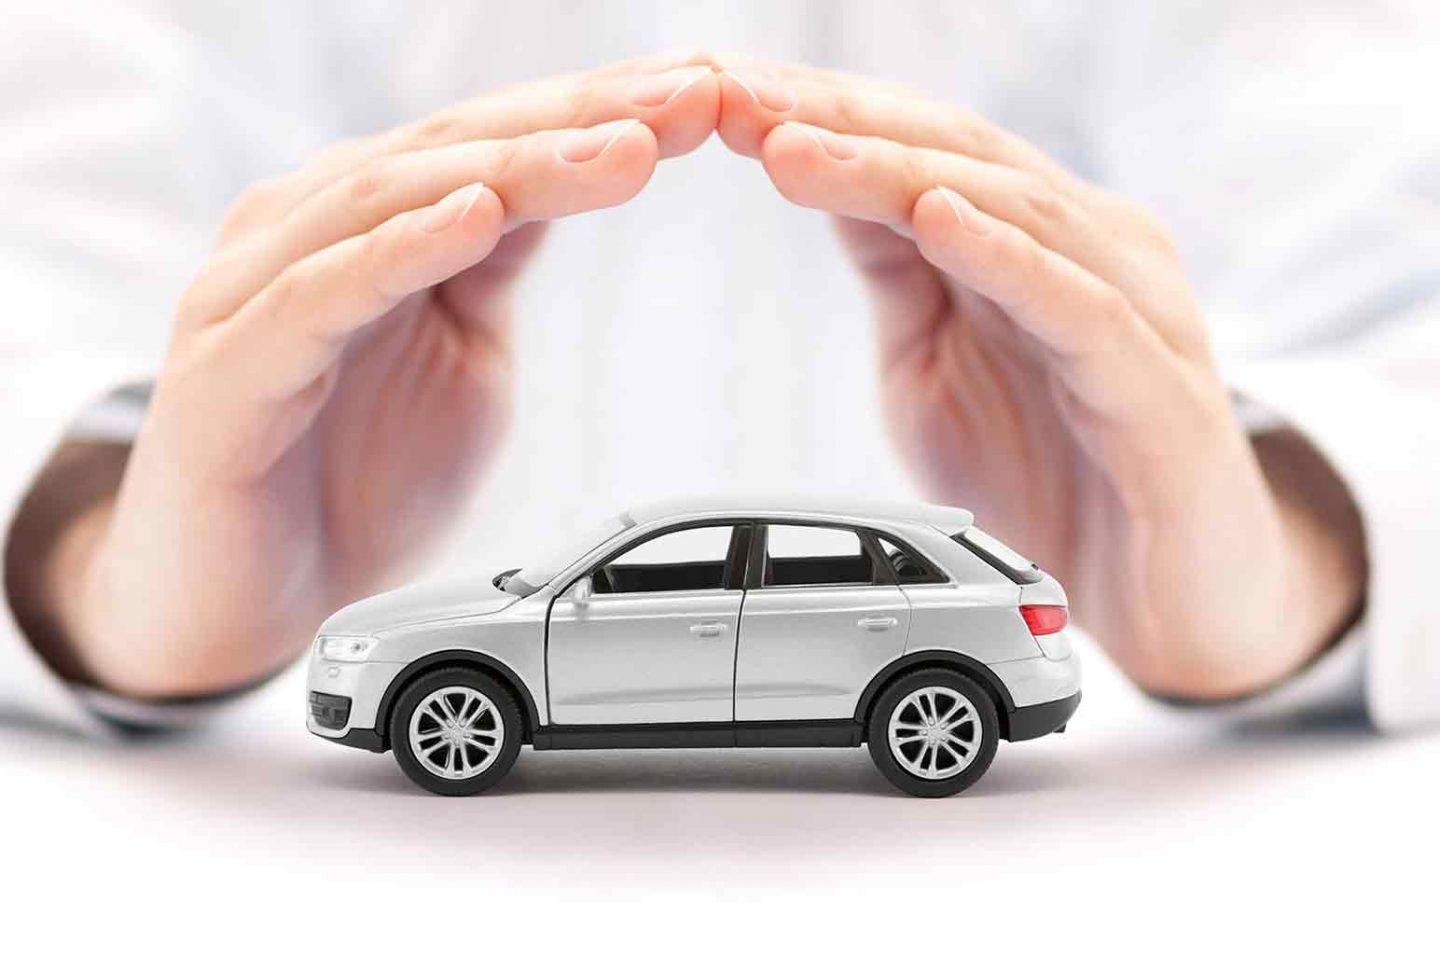 Find Auto Insurance Broker